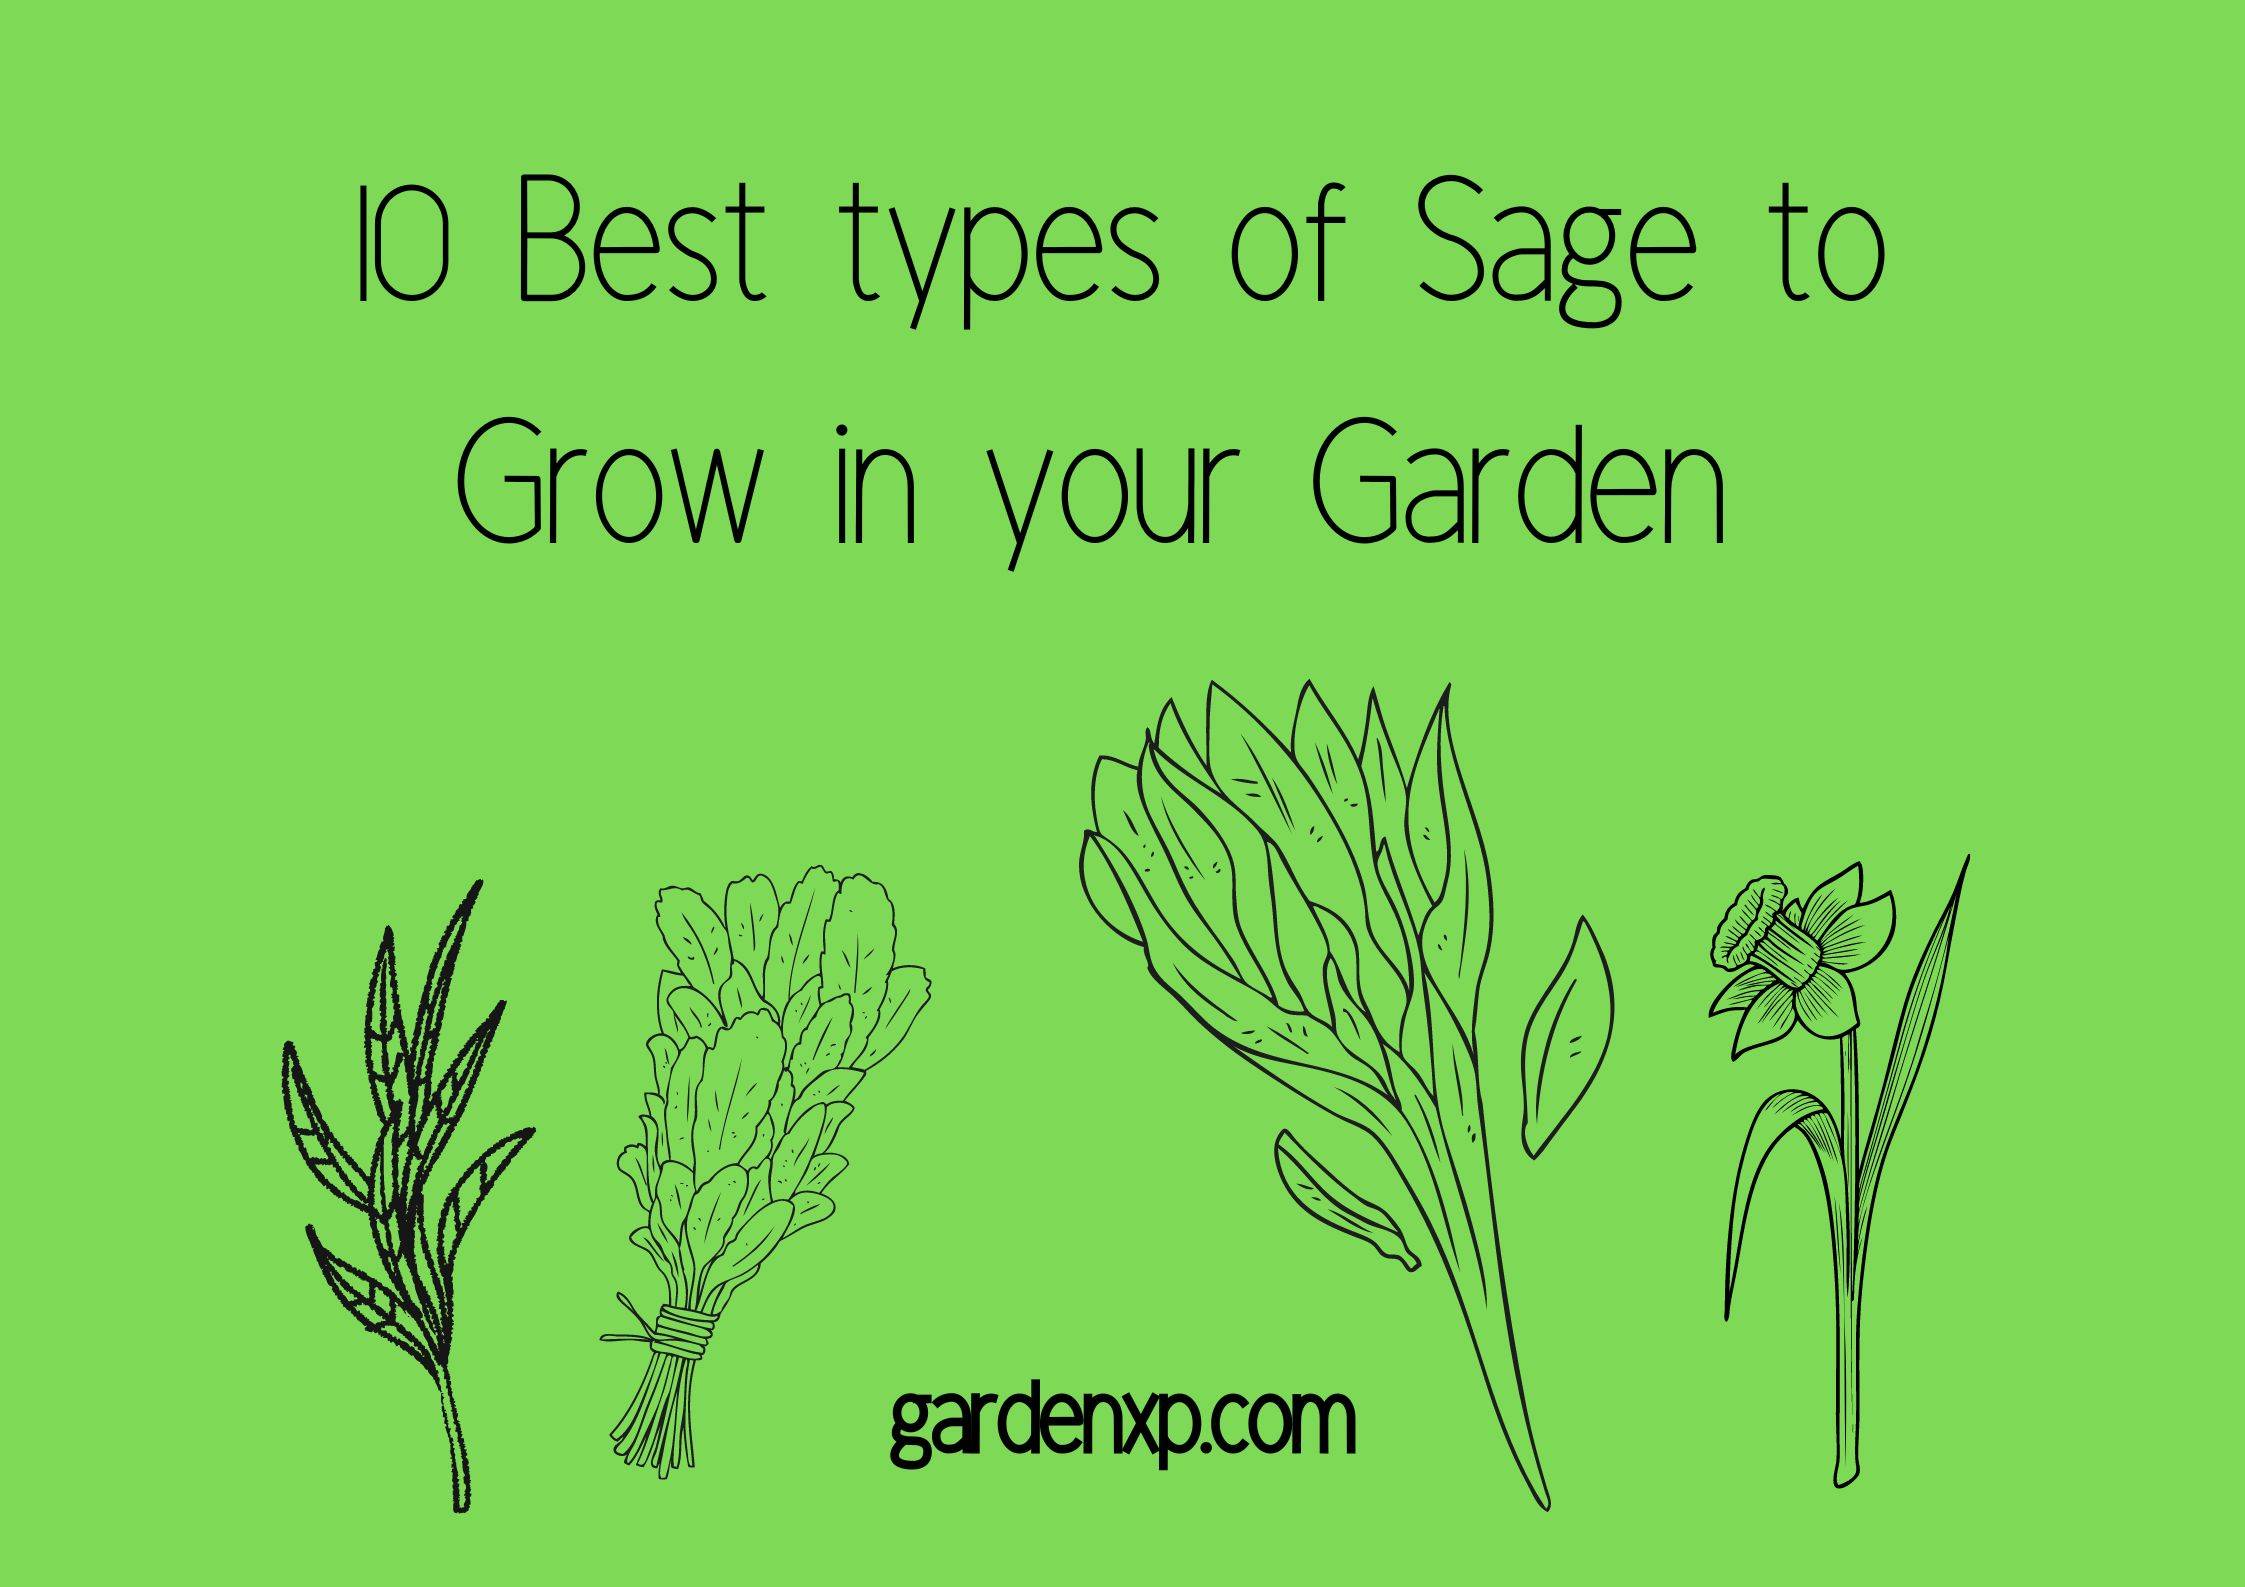 10 Best types of Sage to Grow in your Garden 